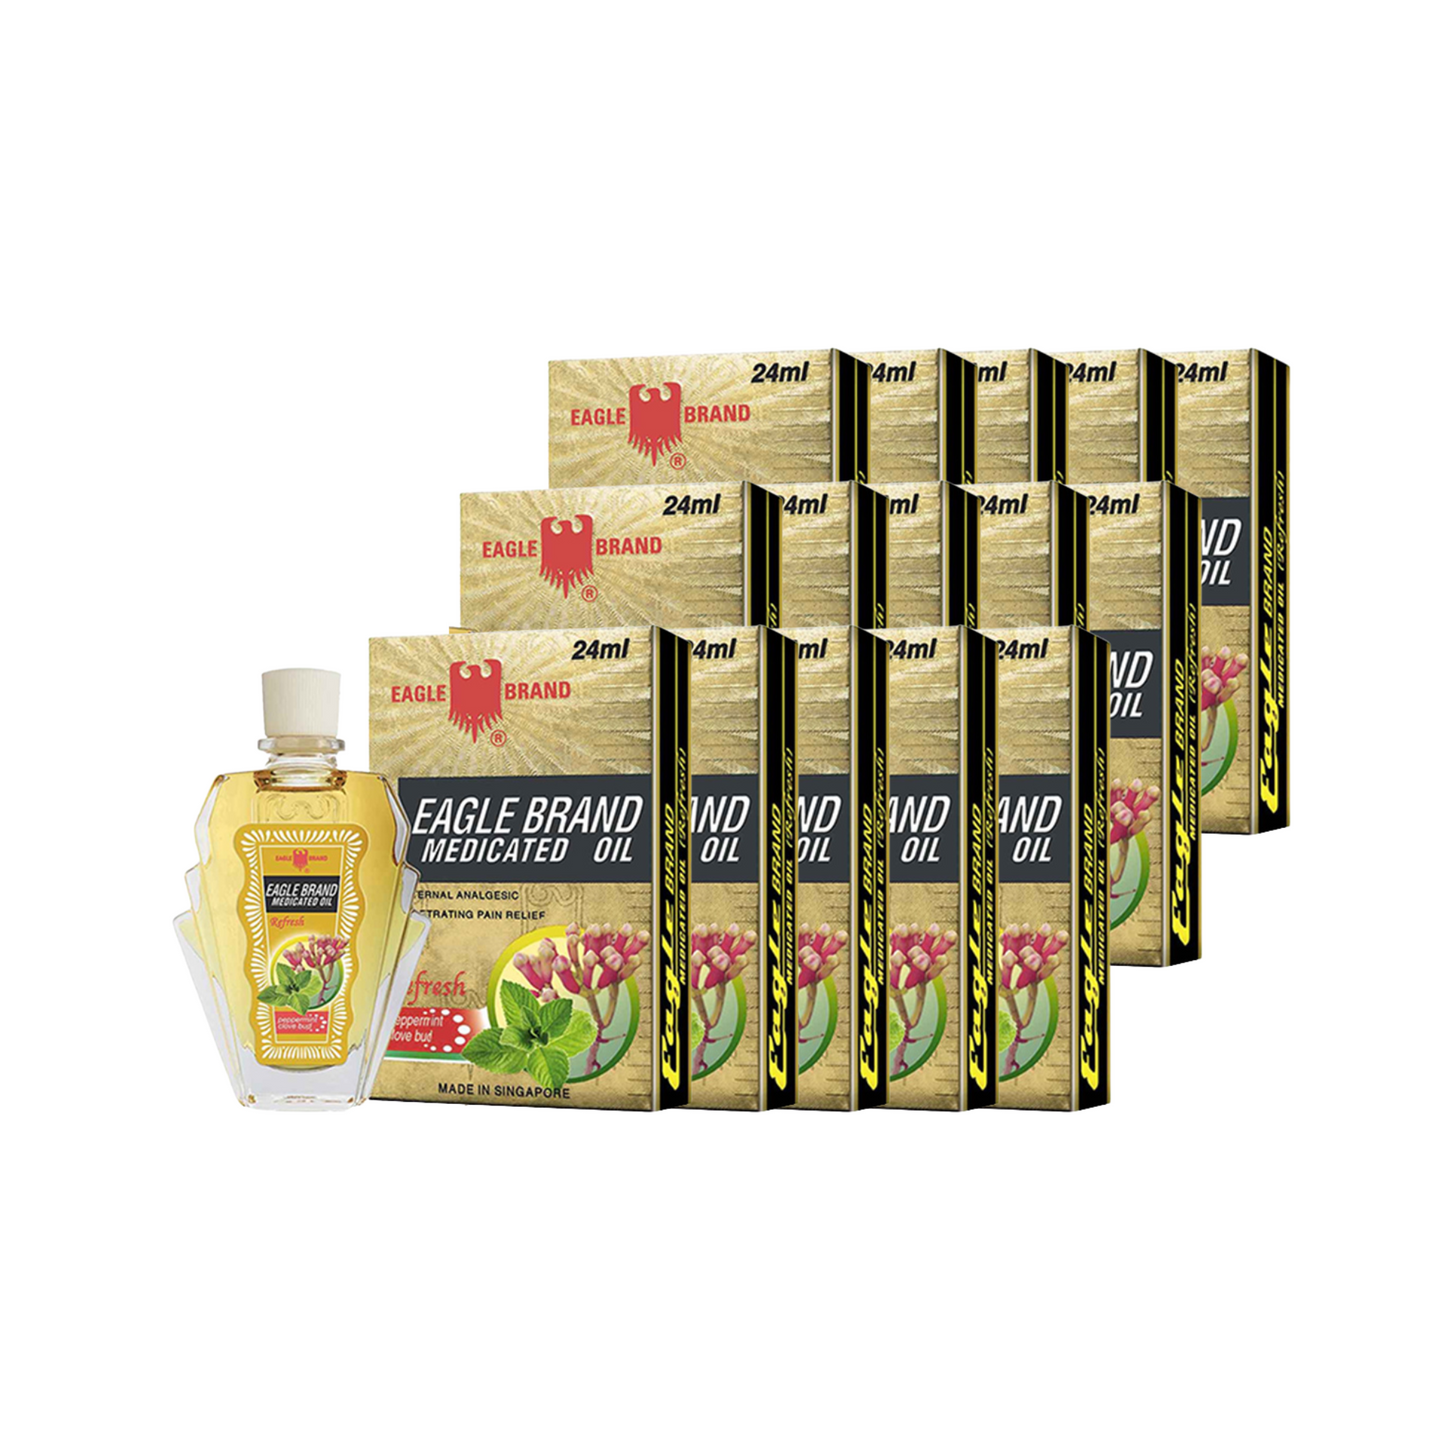 Eagle Brand Medicated Oil Yelloe - Refesh (Box of 12)